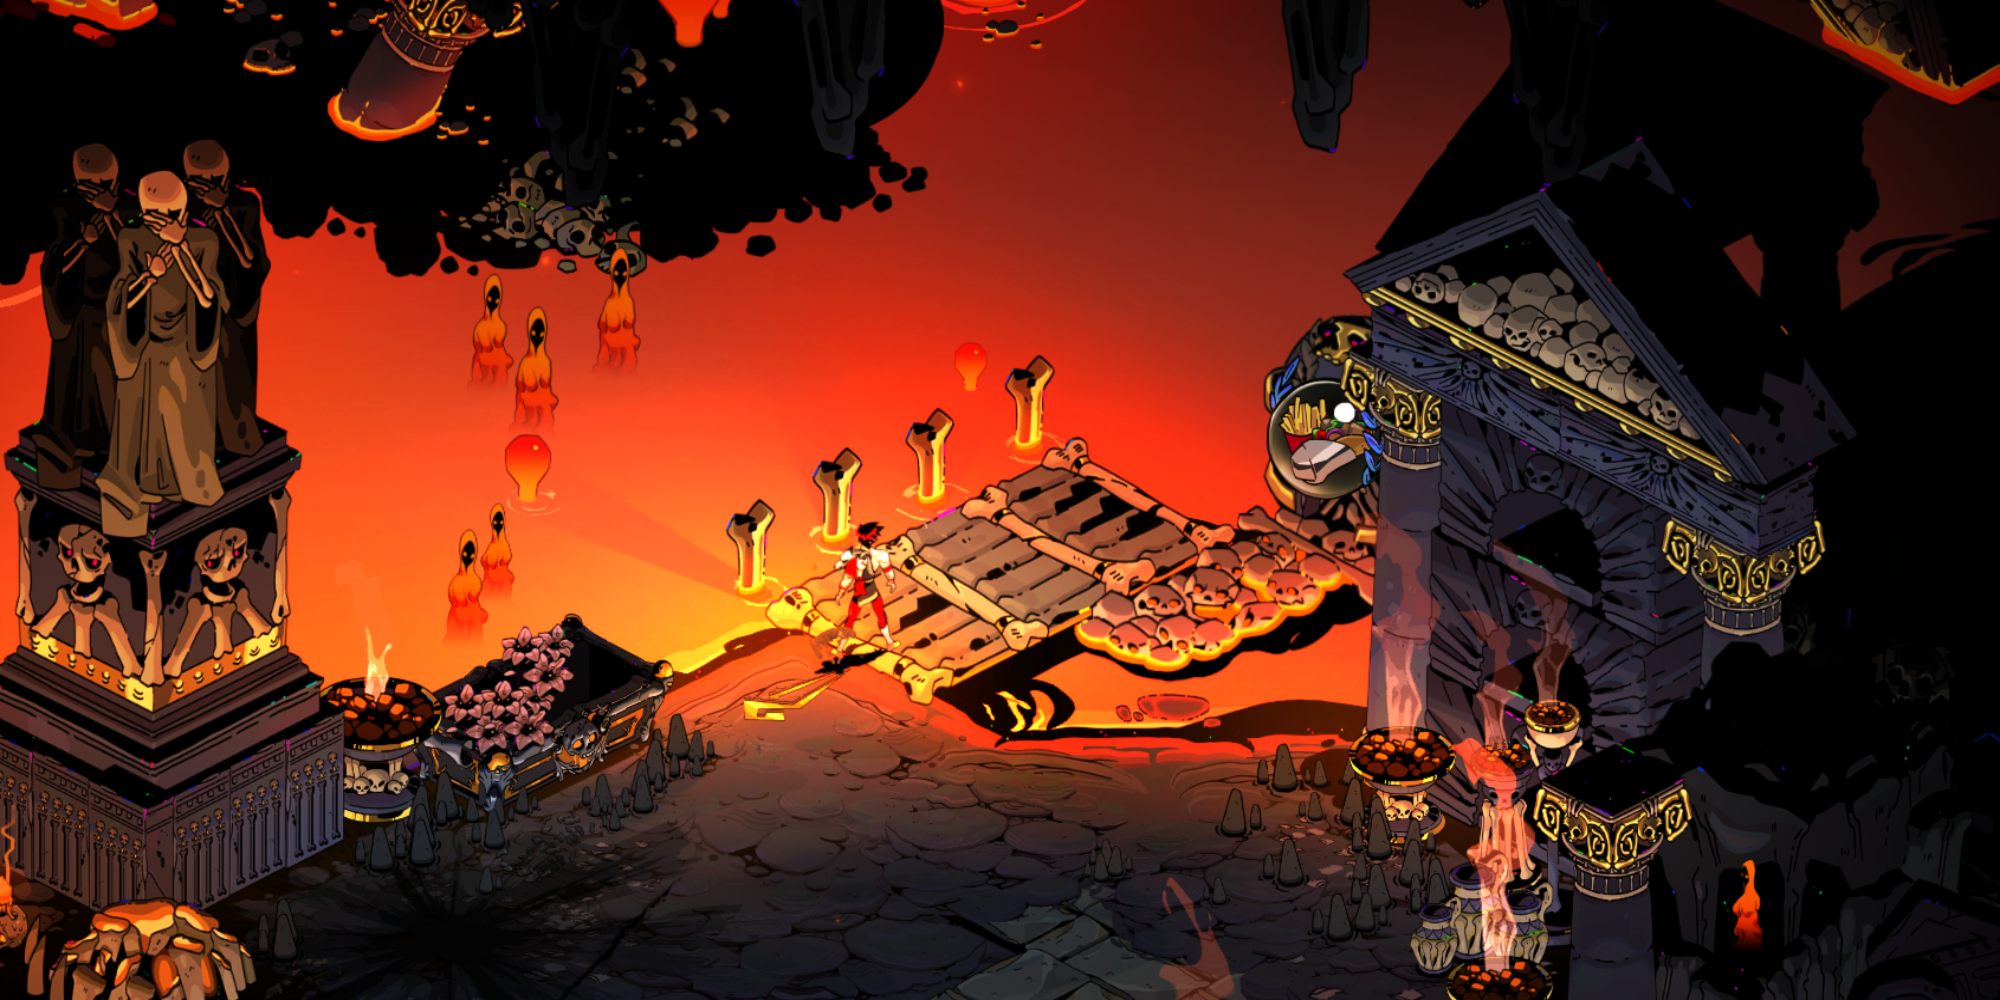 zagreus exploring the underworld fire area in hades